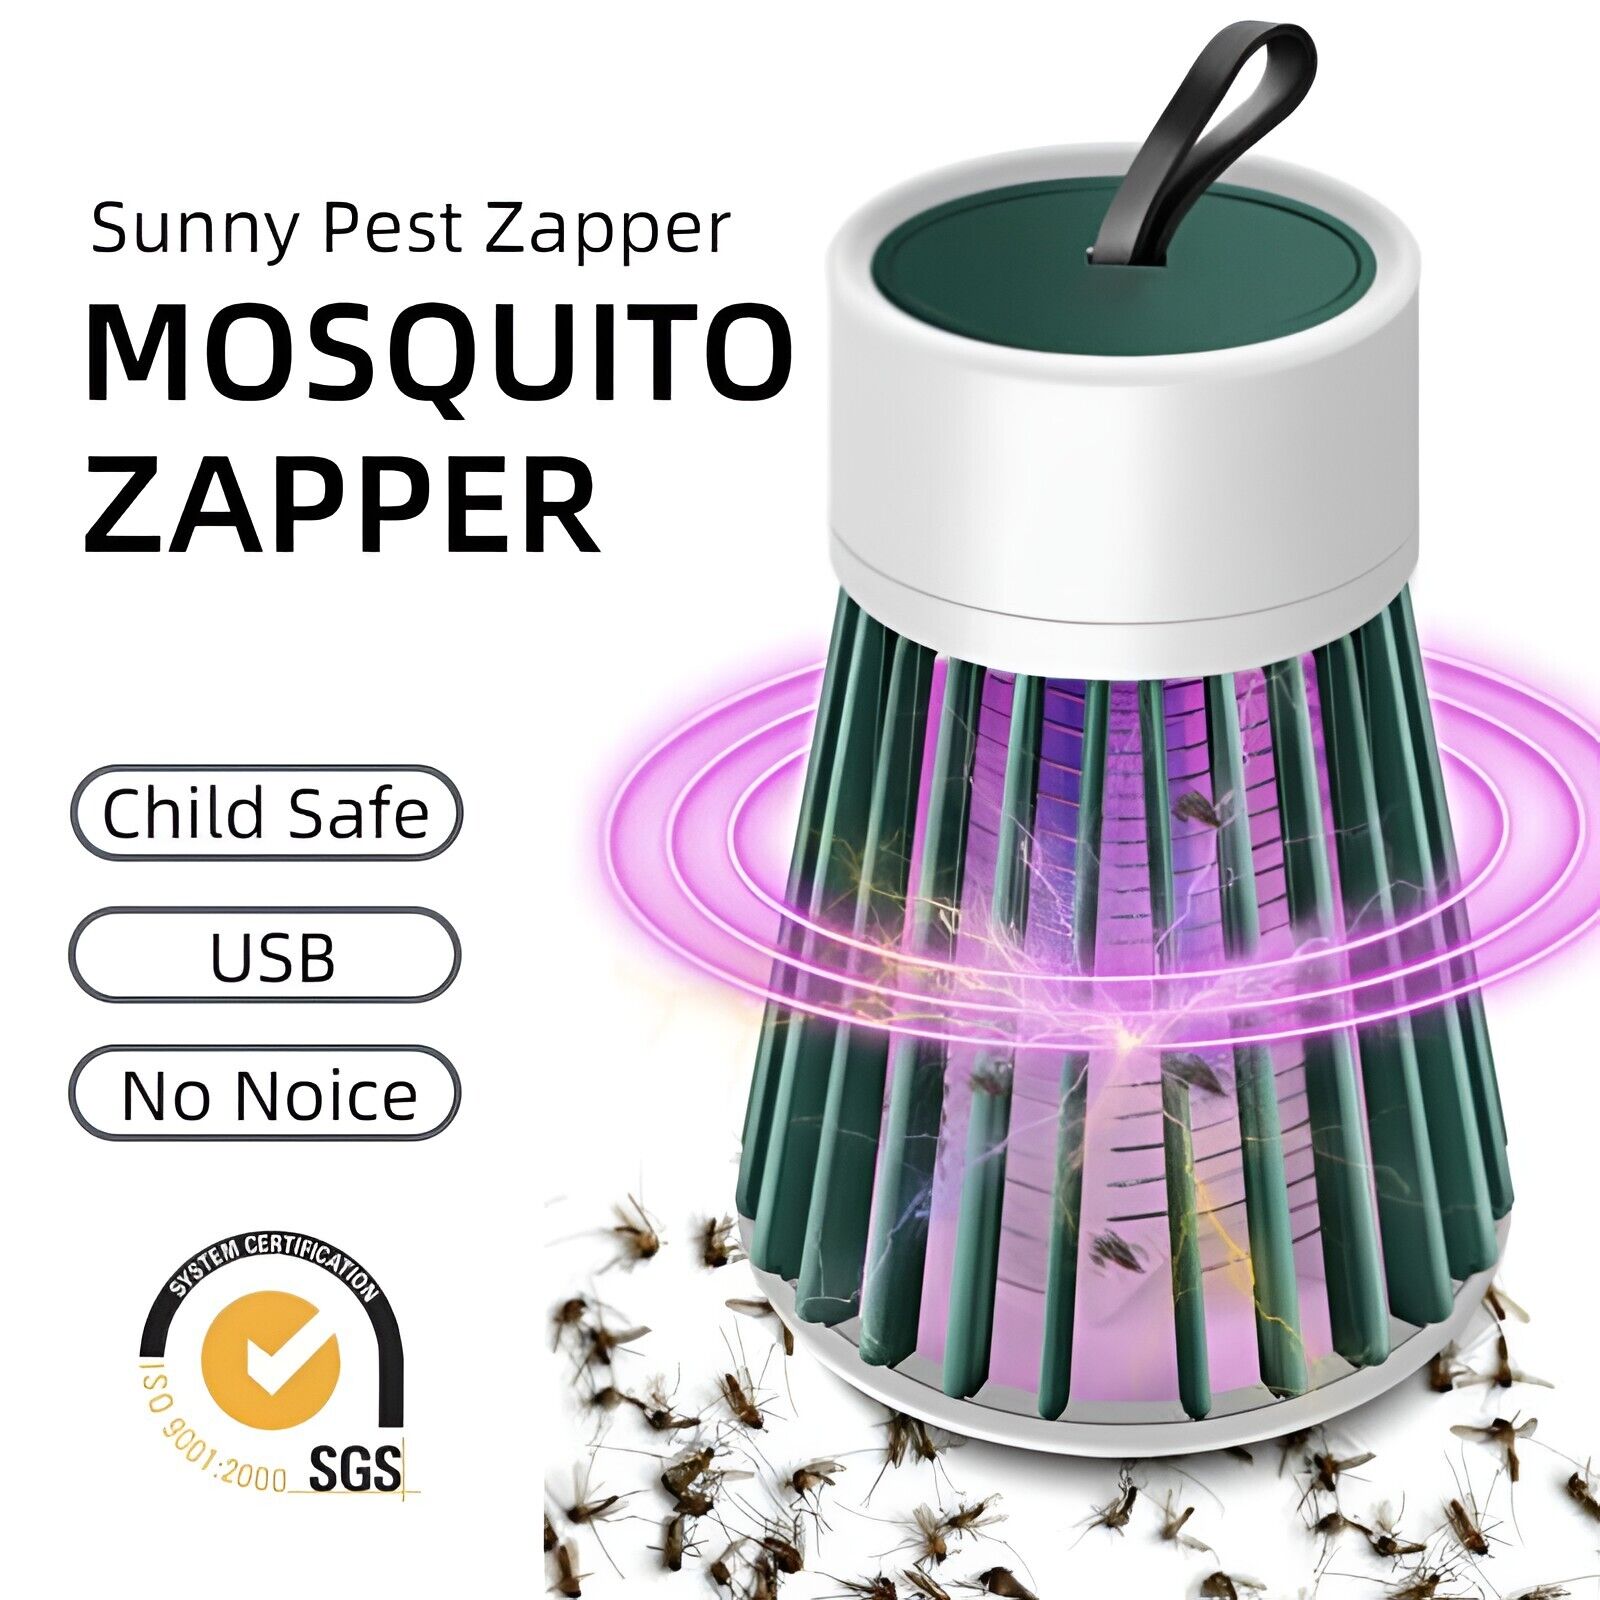 Buzzbgone Zapper Uv Mosquito Killer Trap Fly Bug Insect Zapper New Control Lamp